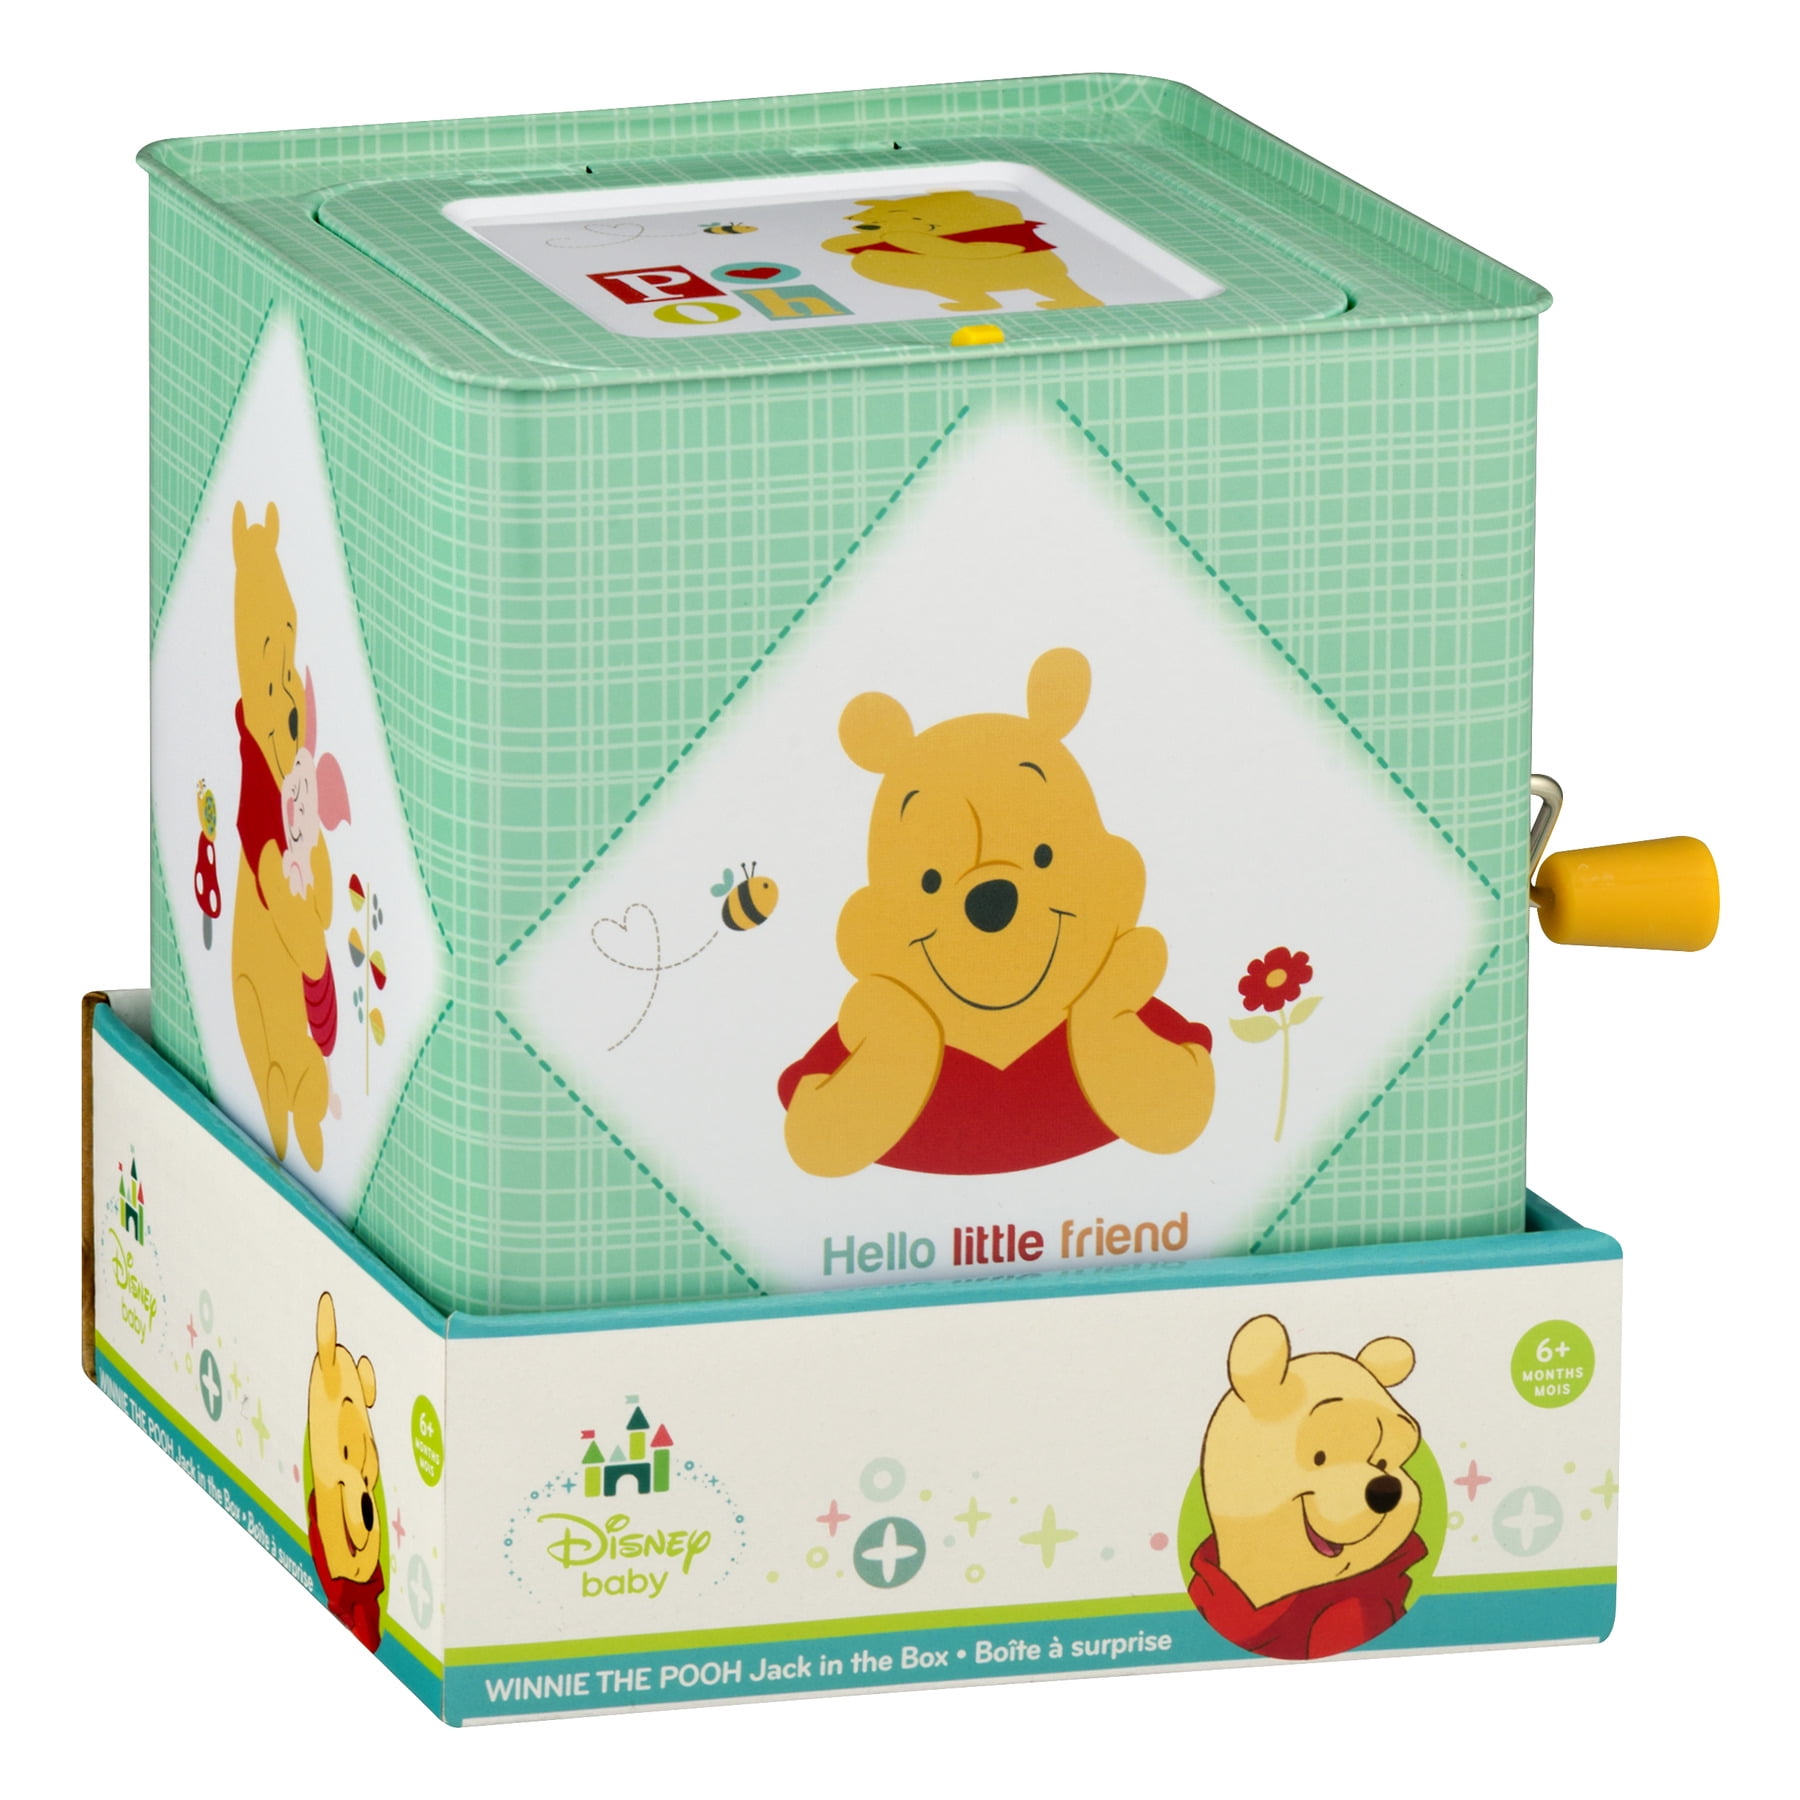 6.5 Kids Preferred Disney Baby Winnie the Pooh Jack-in-the-Box